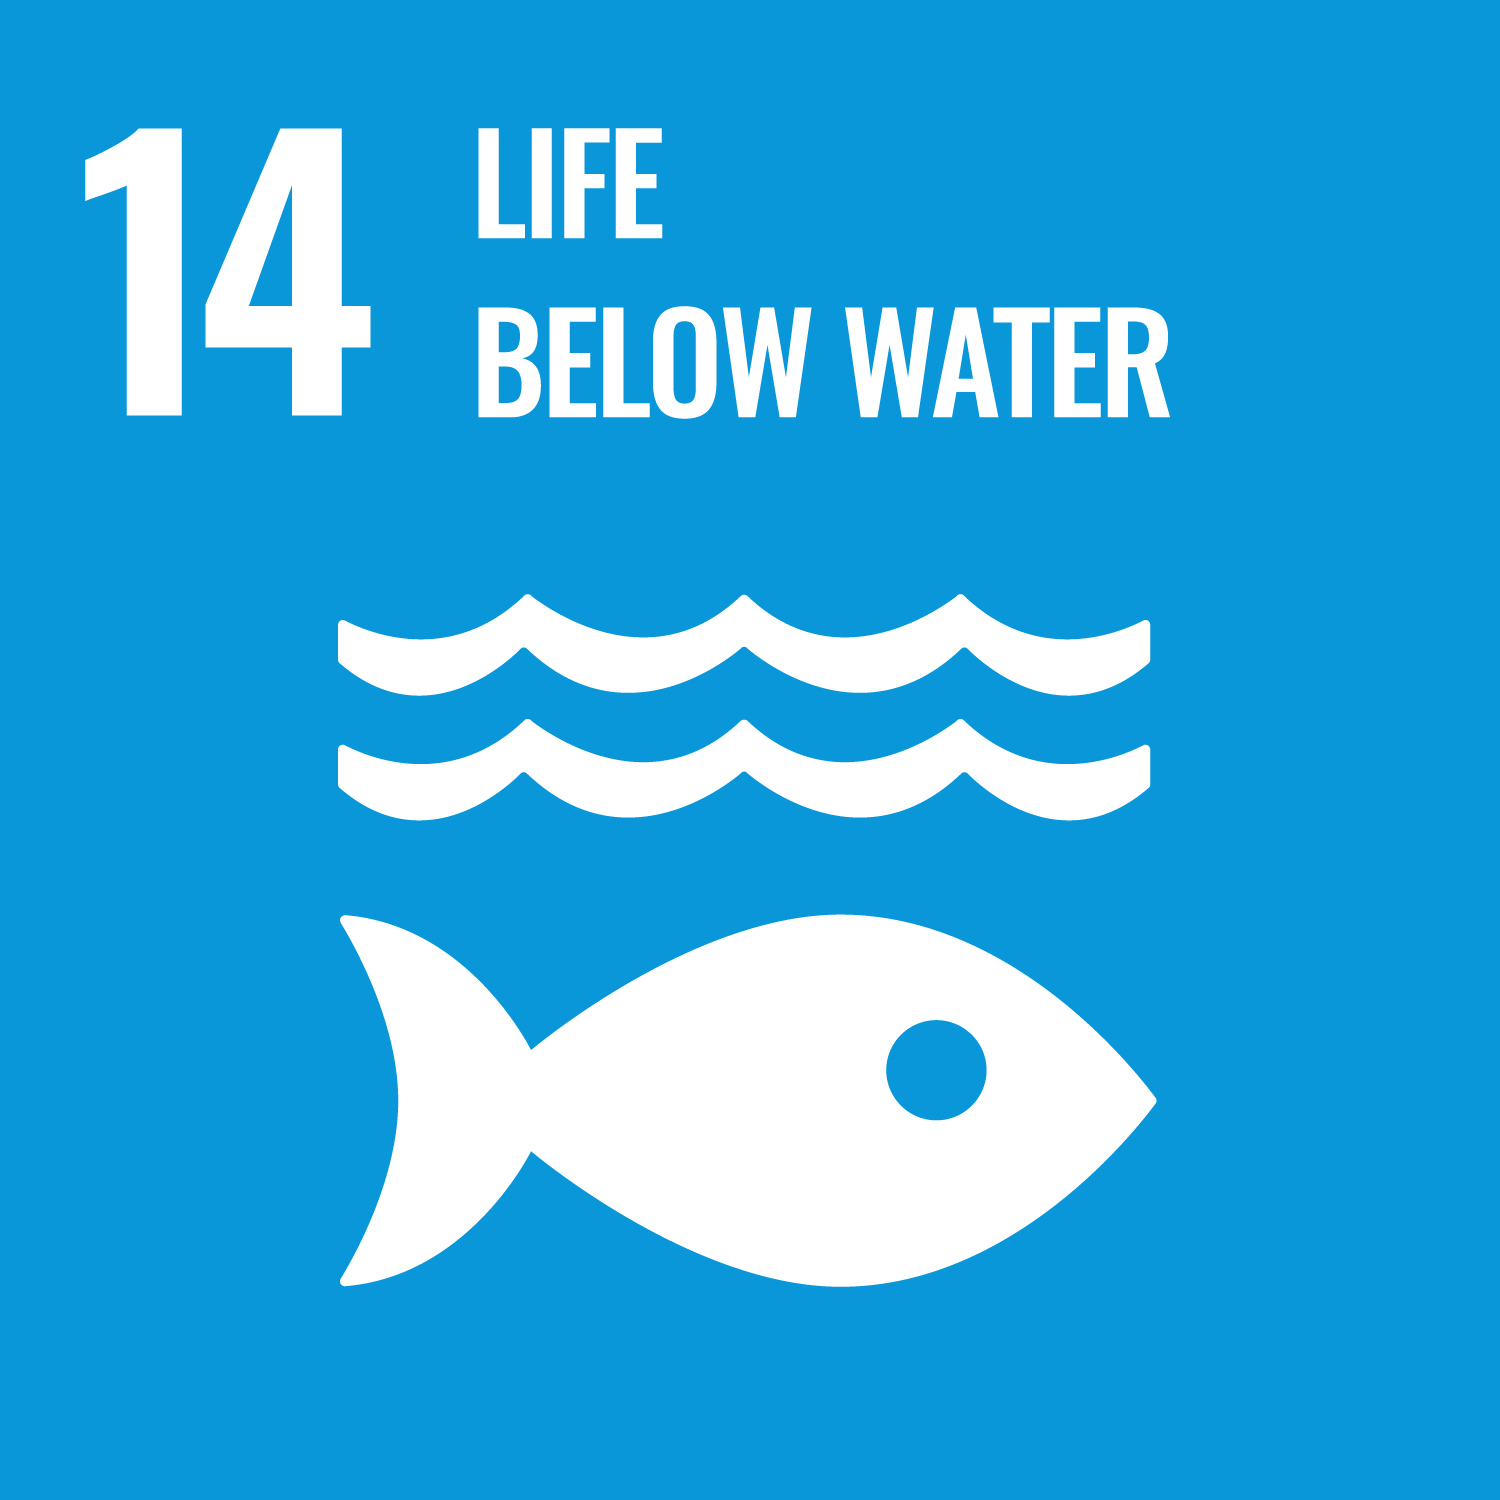 SDGs Goal 14: Life Below Water